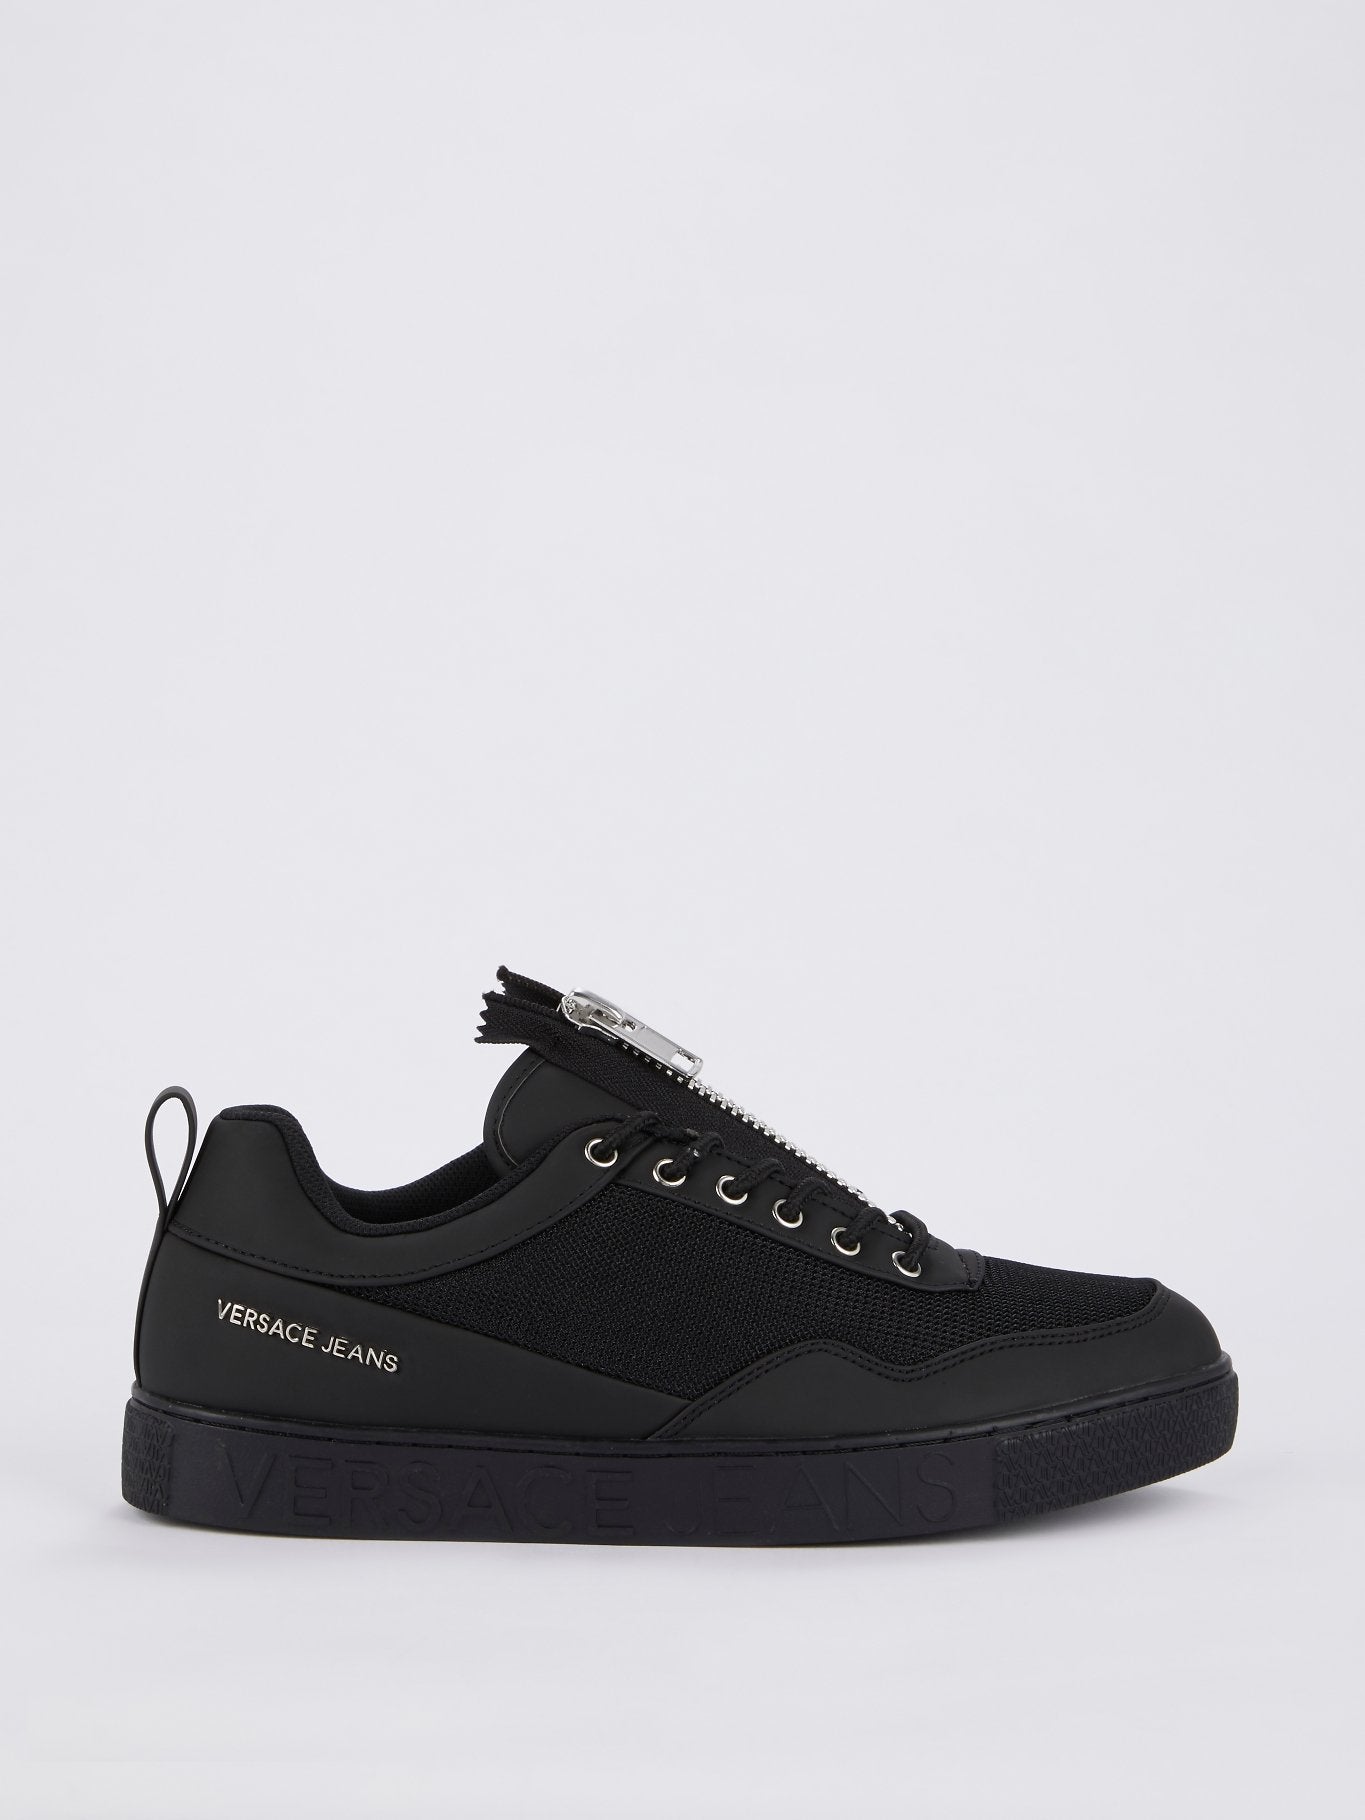 Black Zip Up Mesh Sneakers